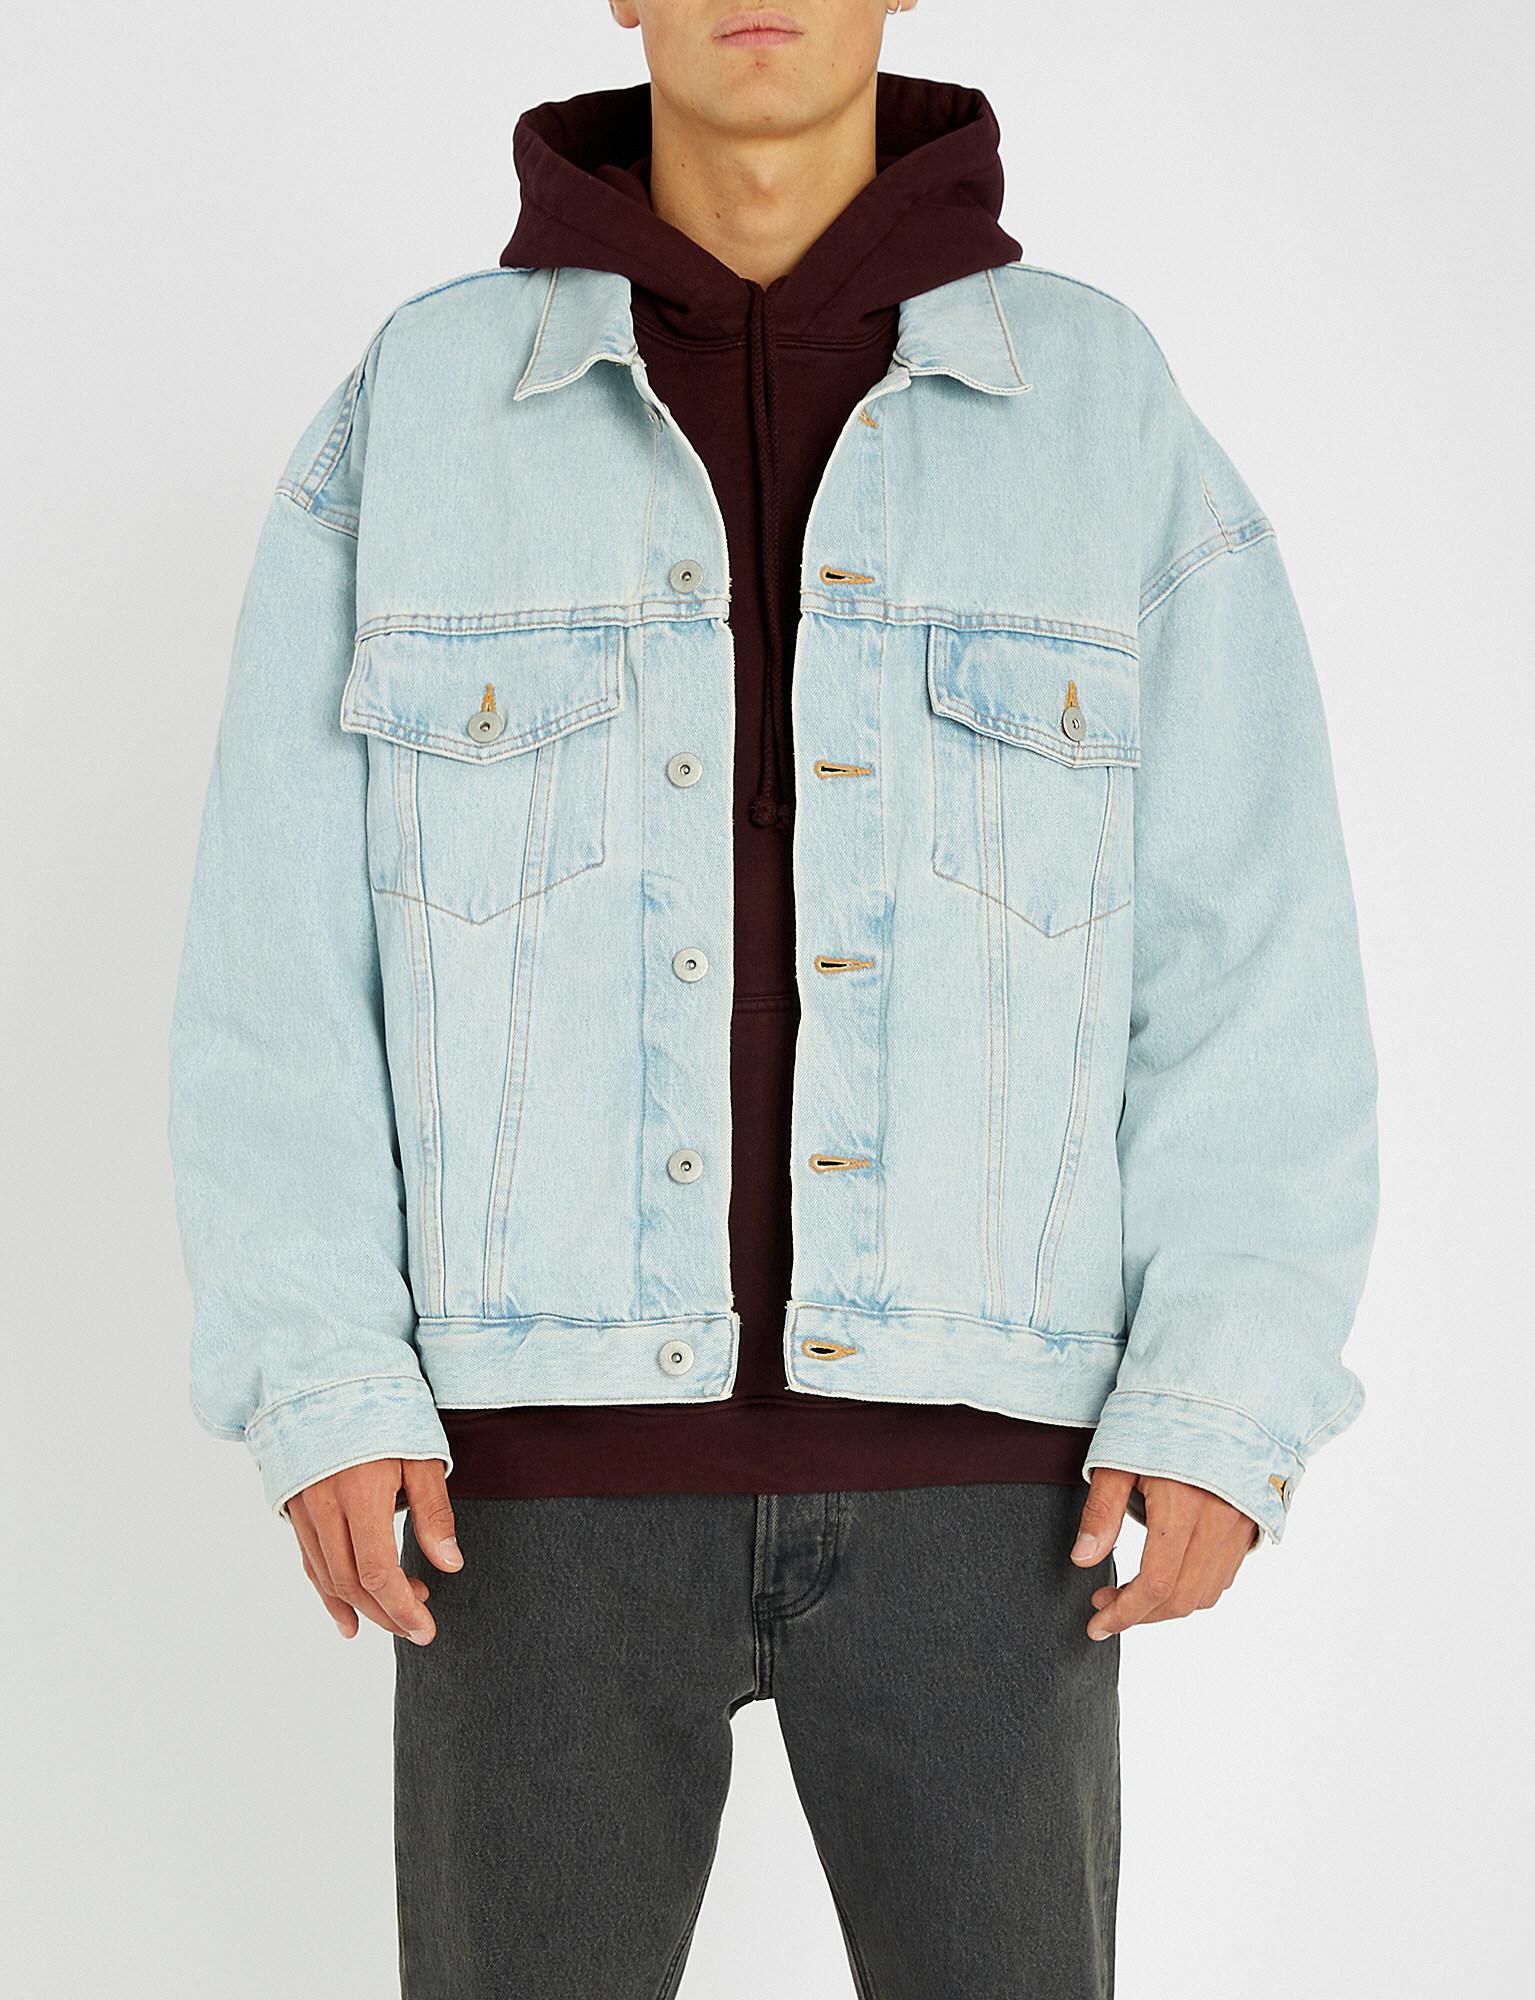 yeezy classic jean jacket